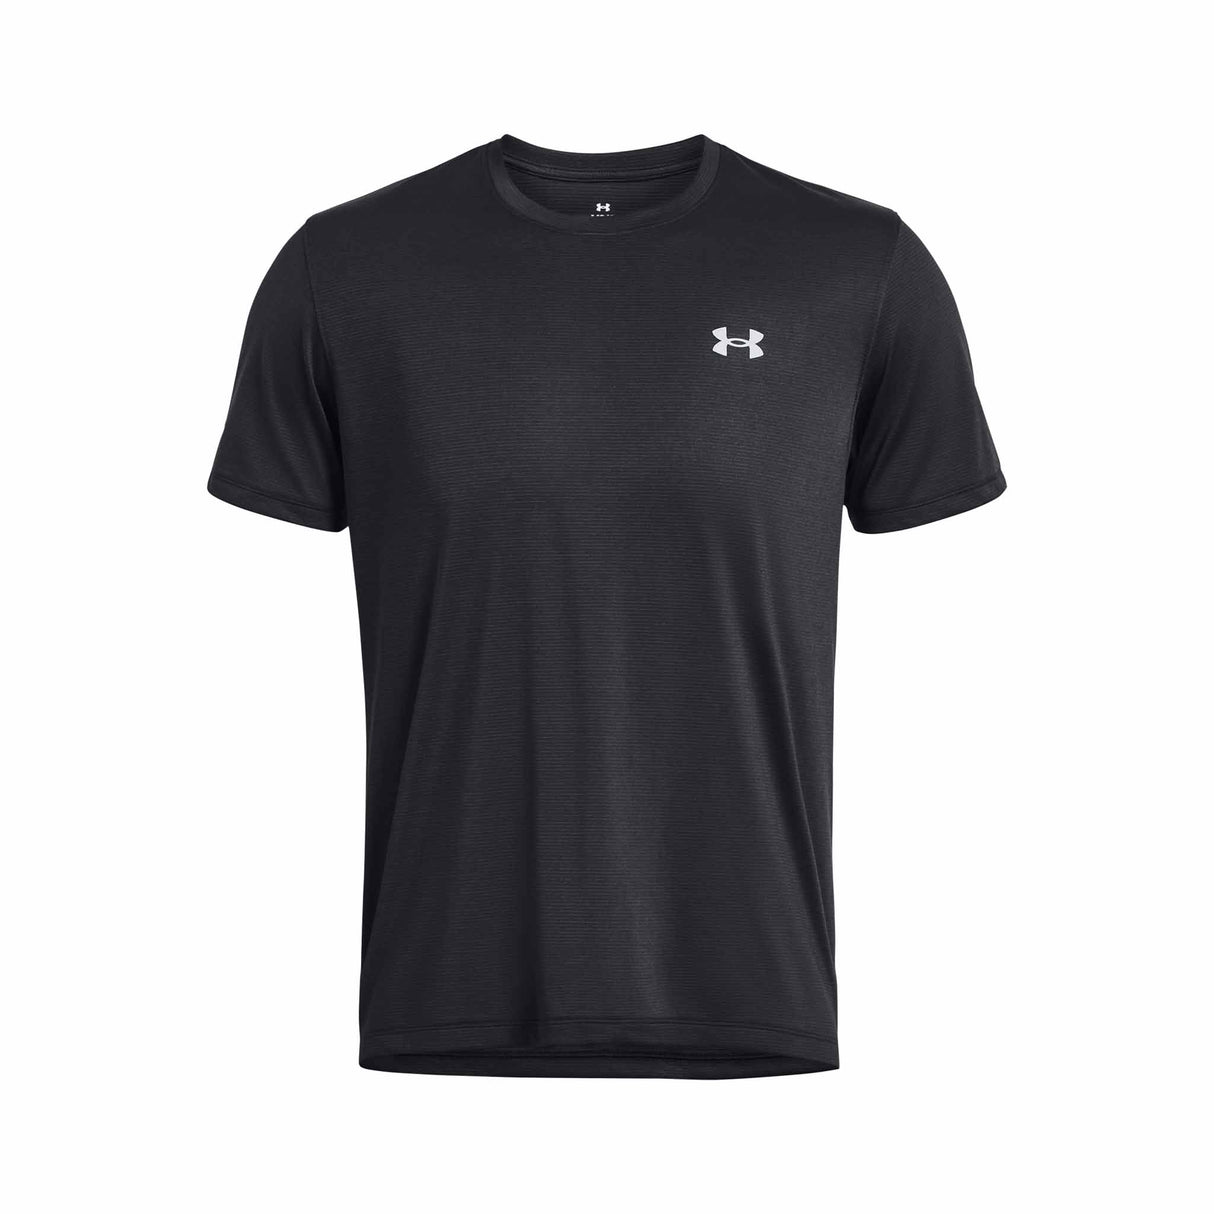 Under Armour Launch t-shirt manches courtes homme - black / reflective